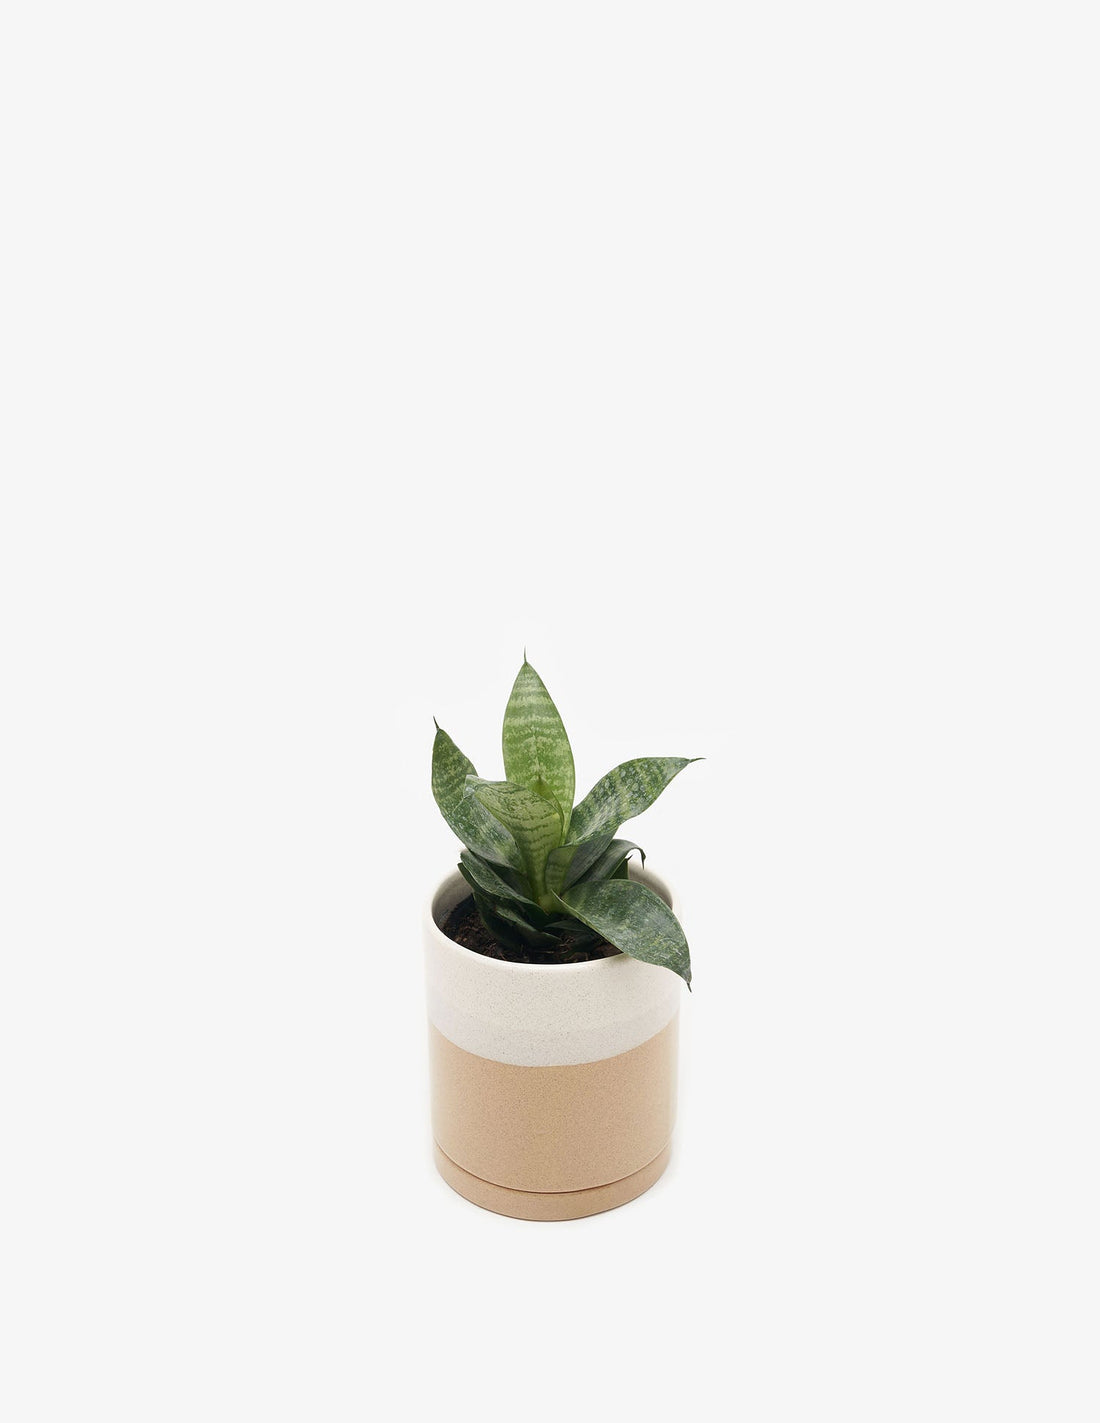 Planta Sansevieria enana en maceta de cerámica | Compra plantas online | Balcón